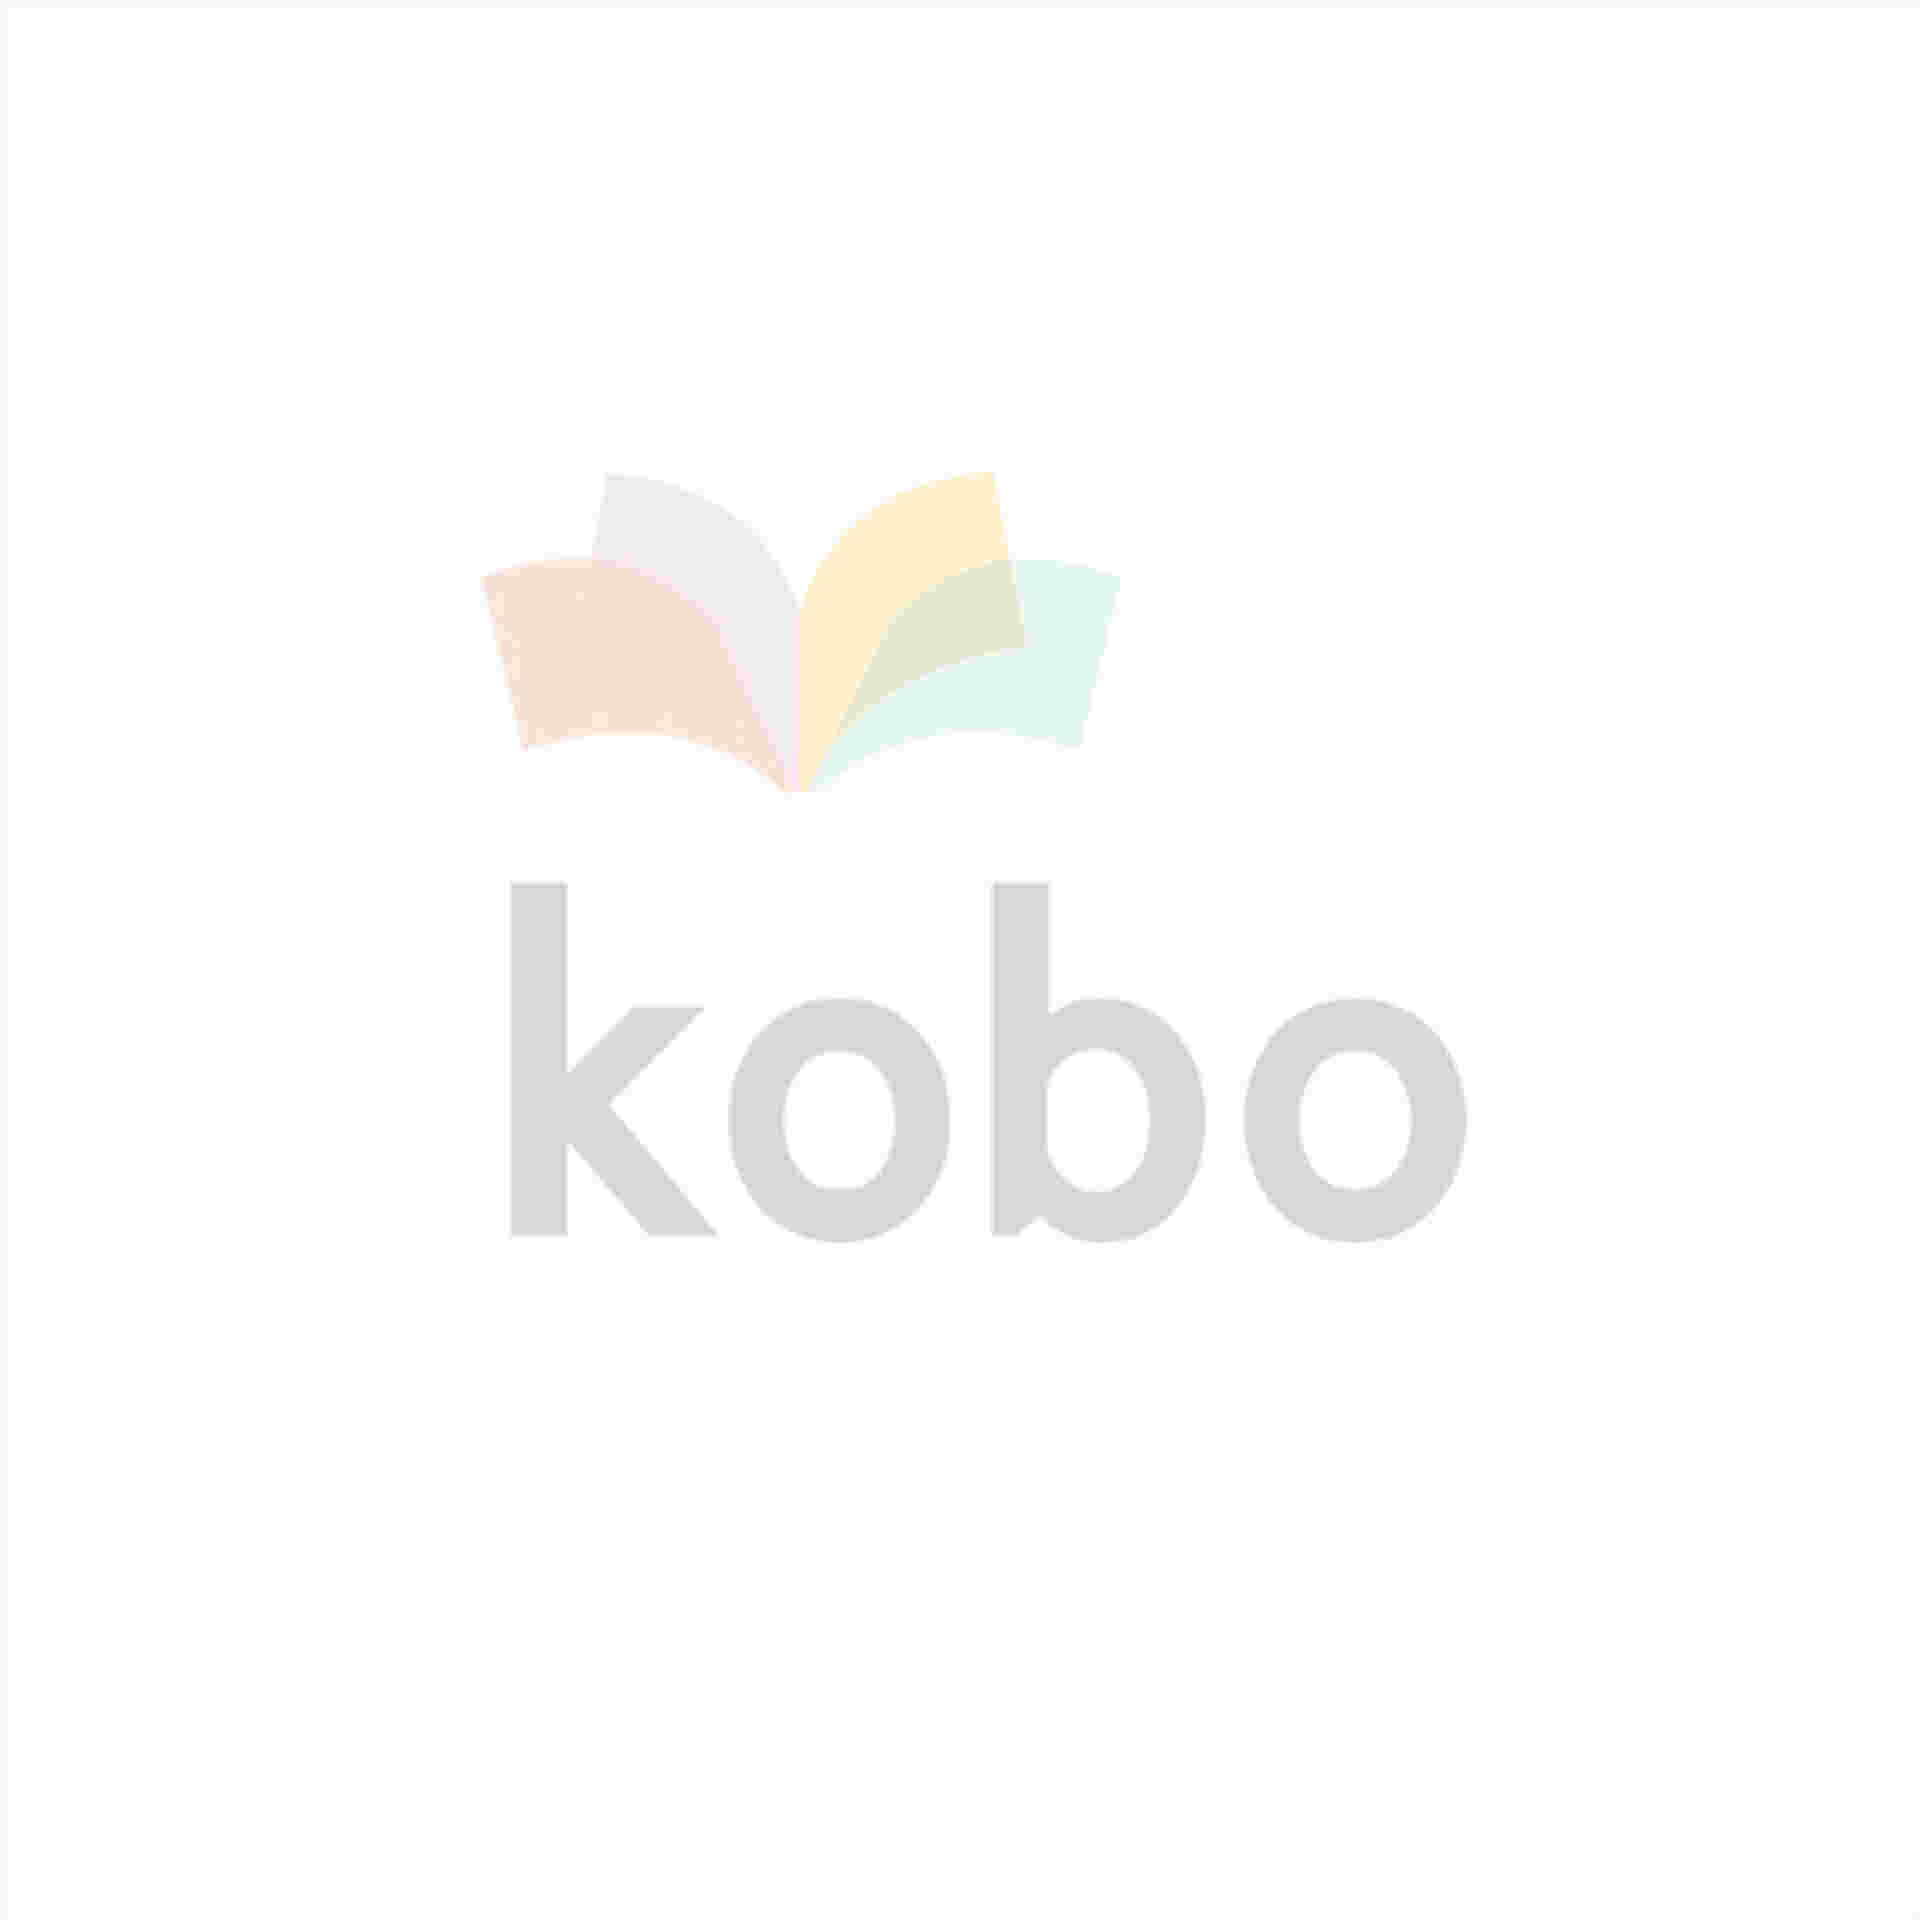 Kobo - feature_kobo_namingidentity_logoconcept4_3col